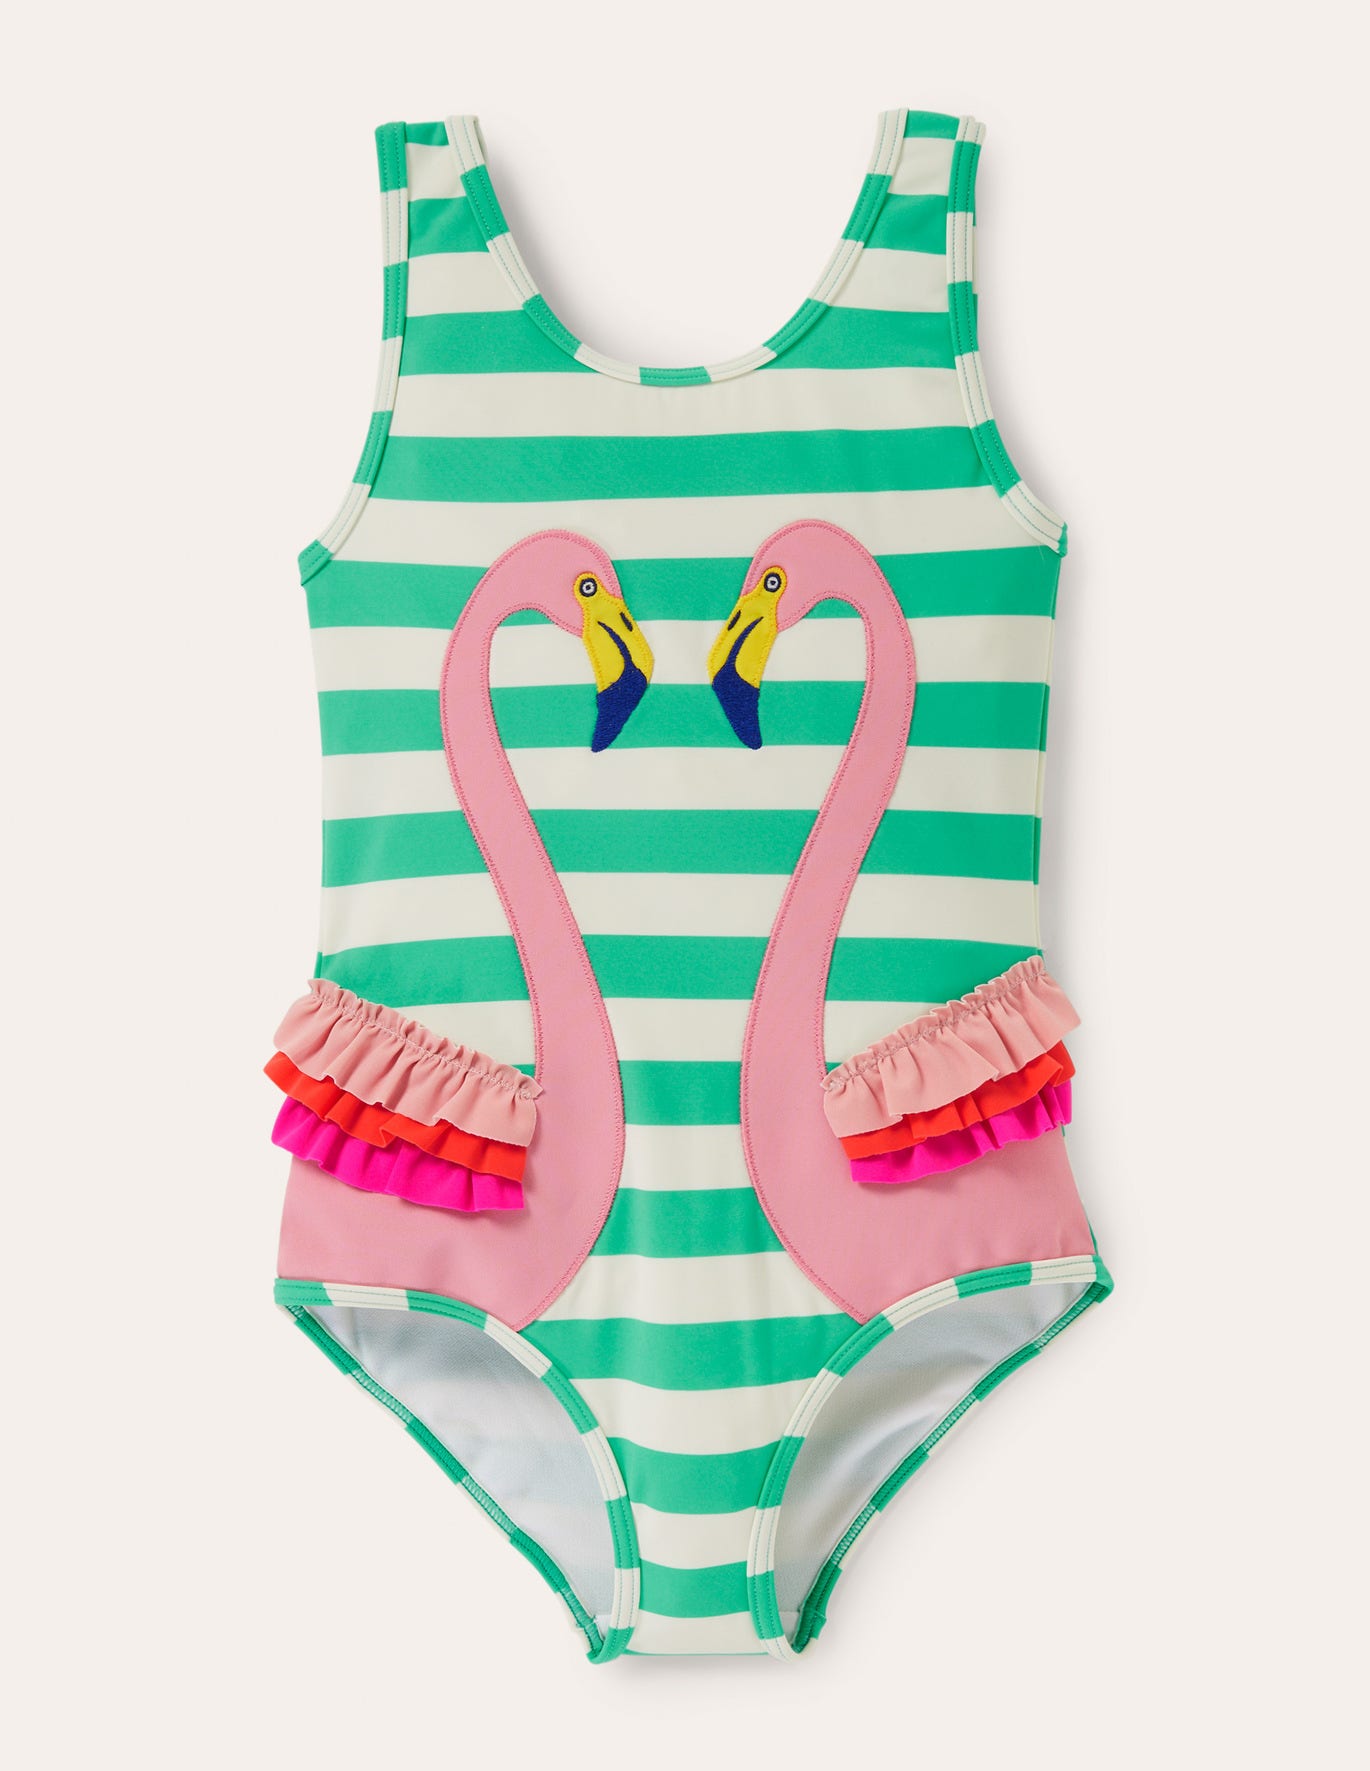 Boden Fun Applique Swimsuit - Tropical Green/Ivory Flamingo